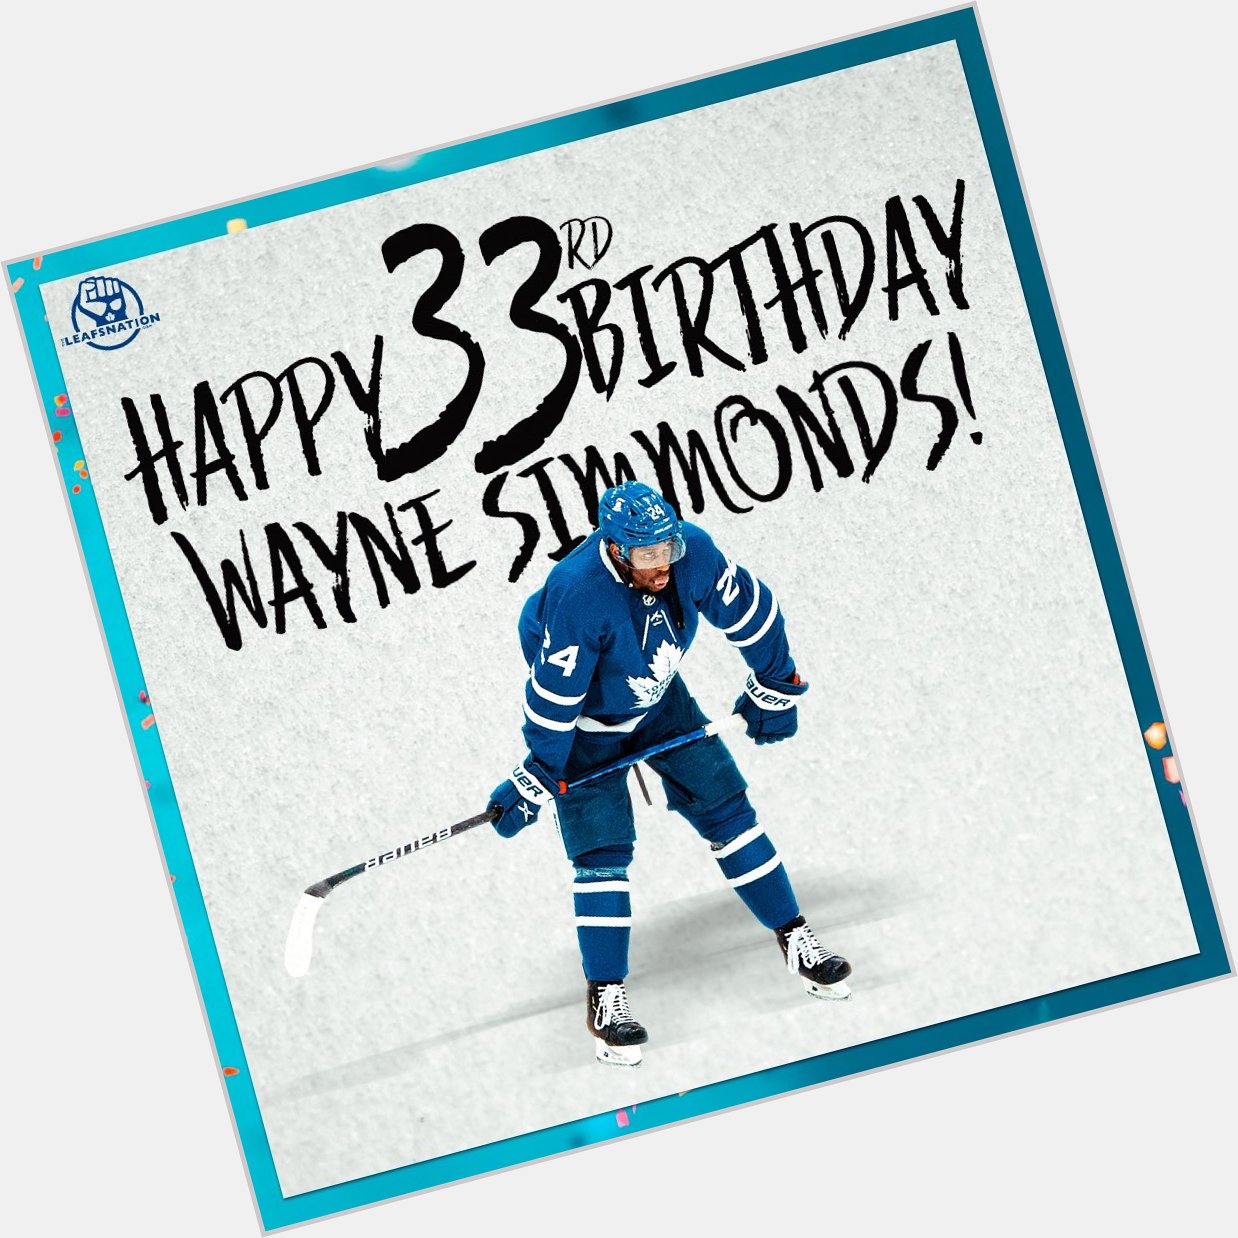 Happy 33rd birthday to Wayne Simmonds! 